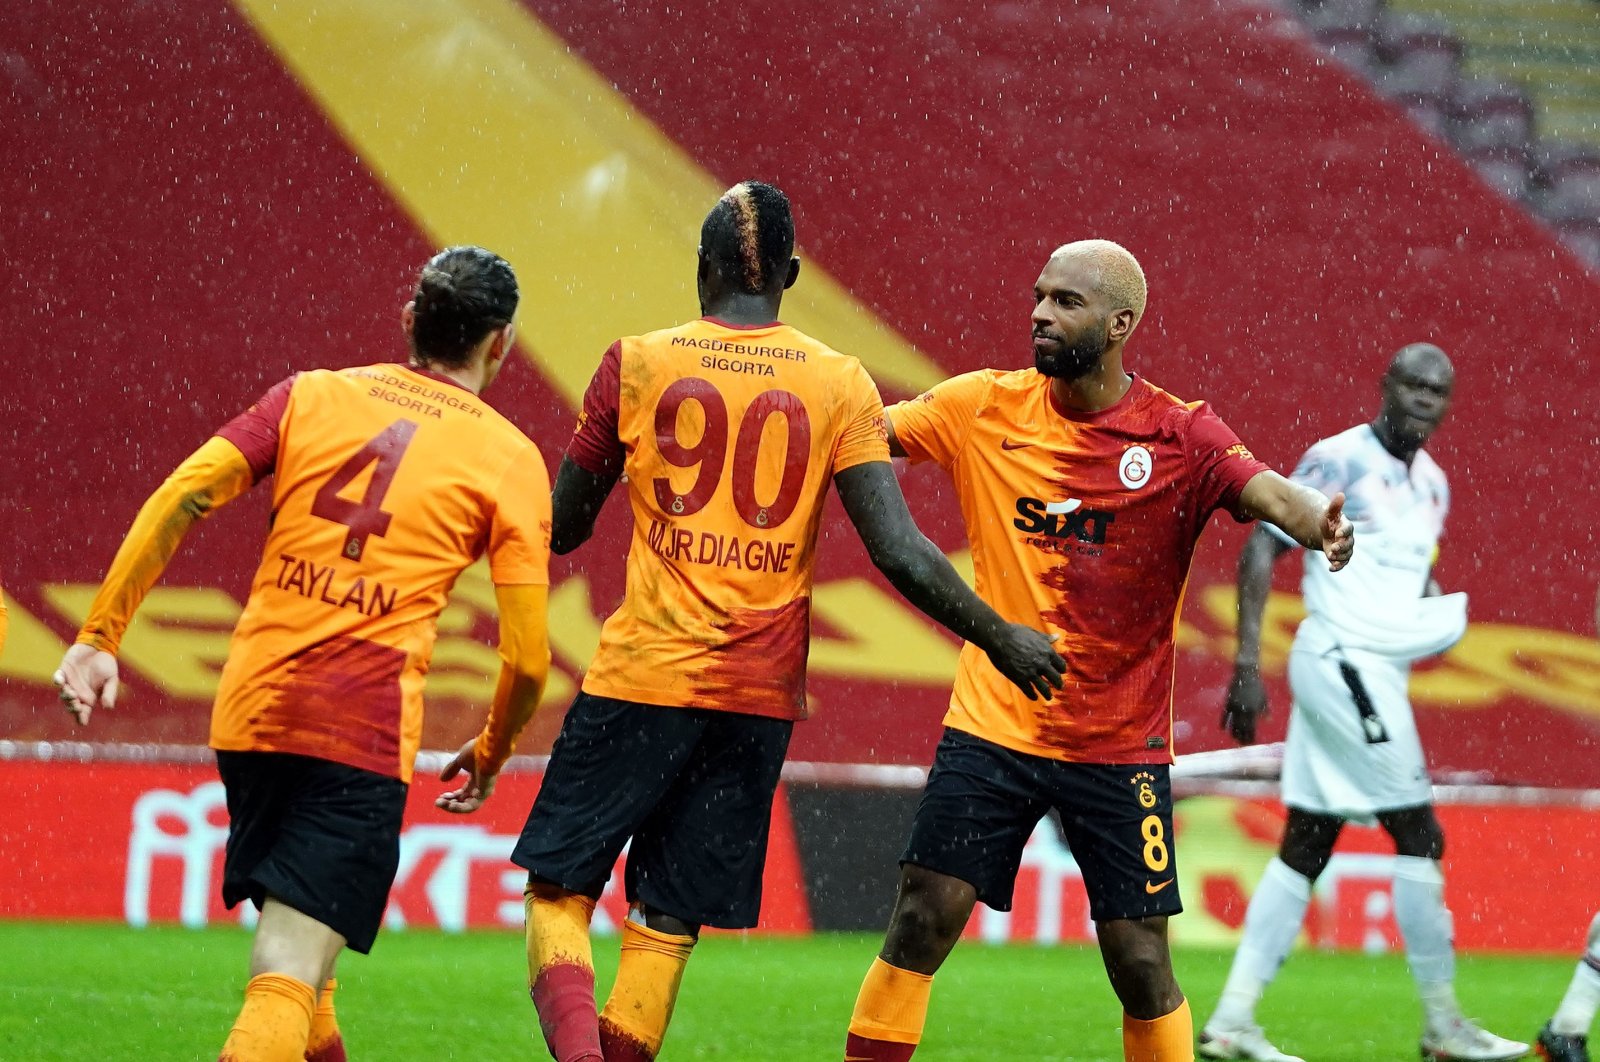 Galatasaray players celebrate a goal during a Süper Lig match against Gençlerbirliği at the Türk Telekom Arena stadium, in Istanbul, Turkey, Jan. 9, 2021. (IHA Photo)